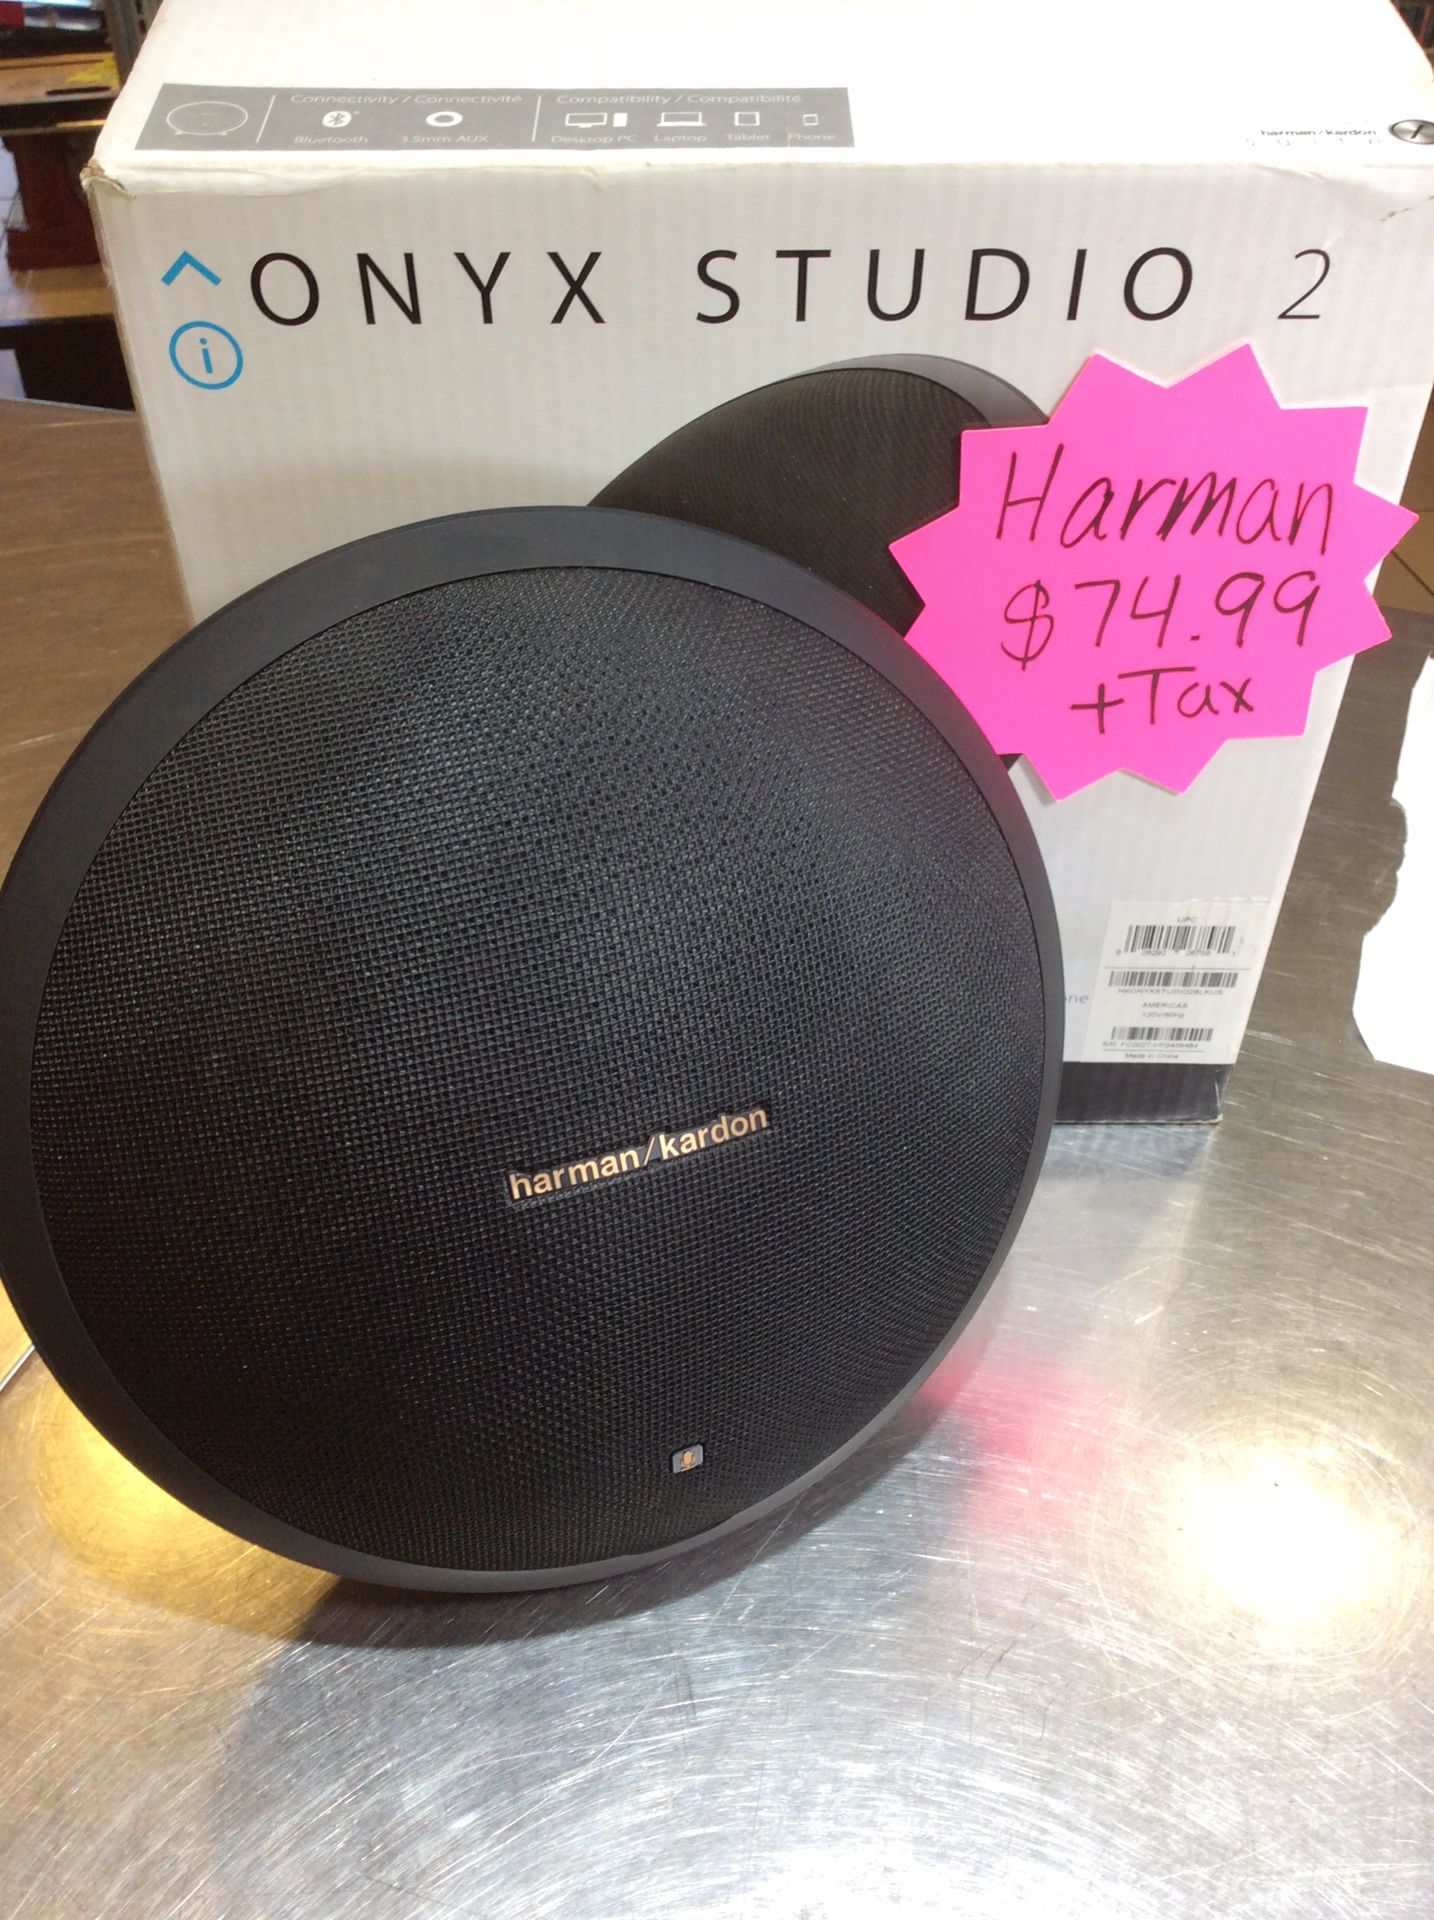 HARMAN / KARDON ONYX STUDIO 2 Sale in Phoenix, AZ OfferUp